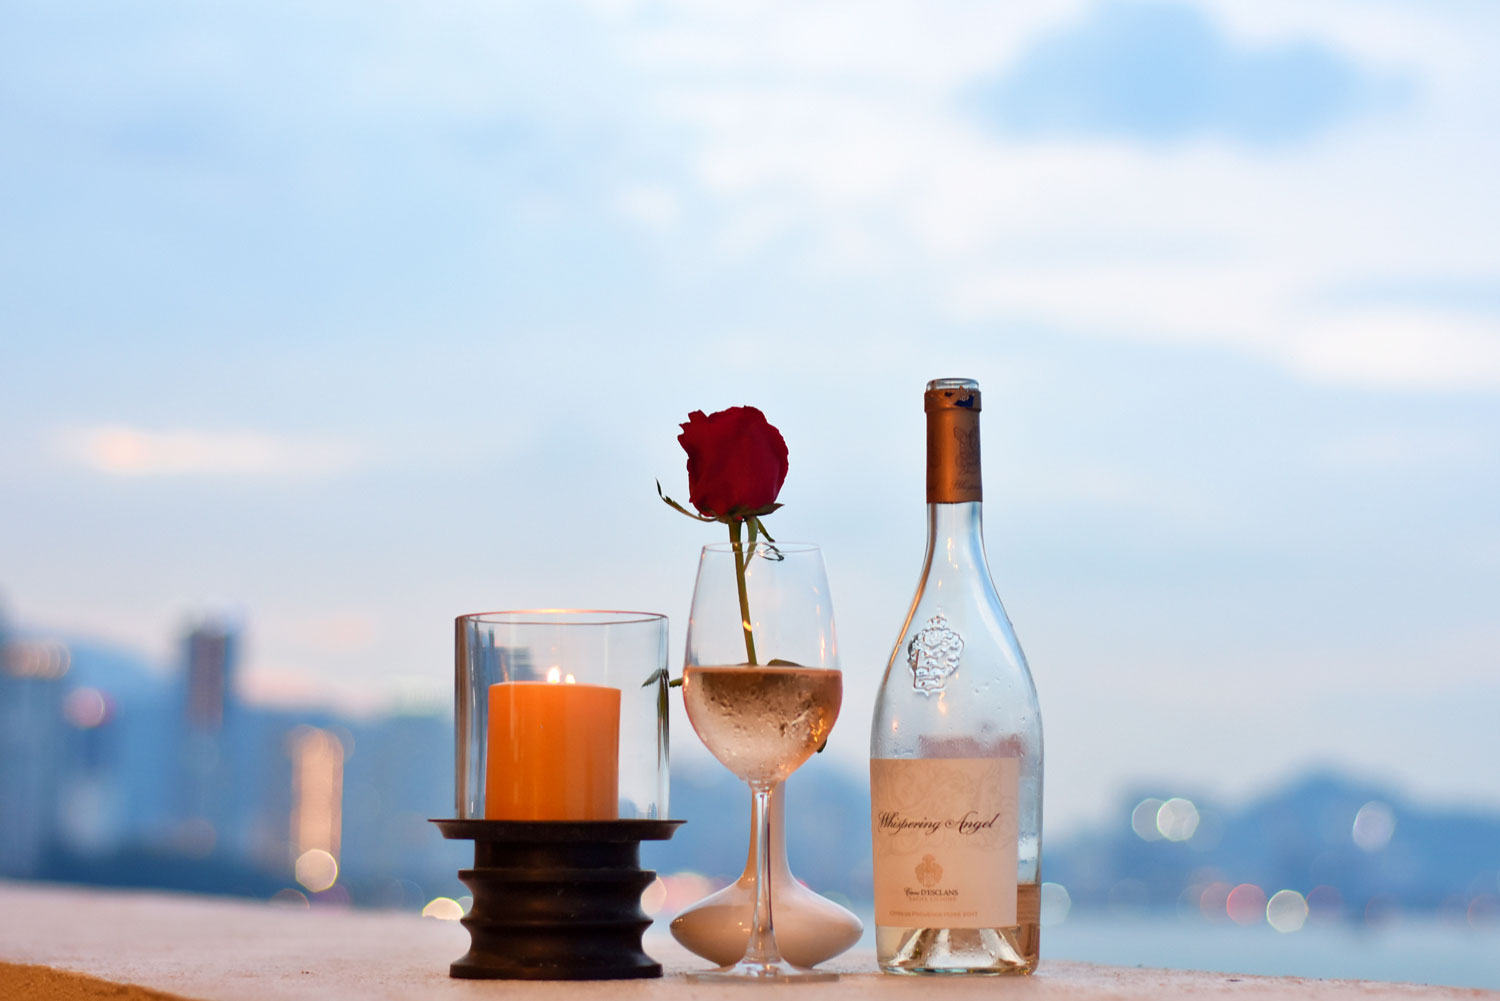 E&O Hotel: Enjoy a Taste of Romance